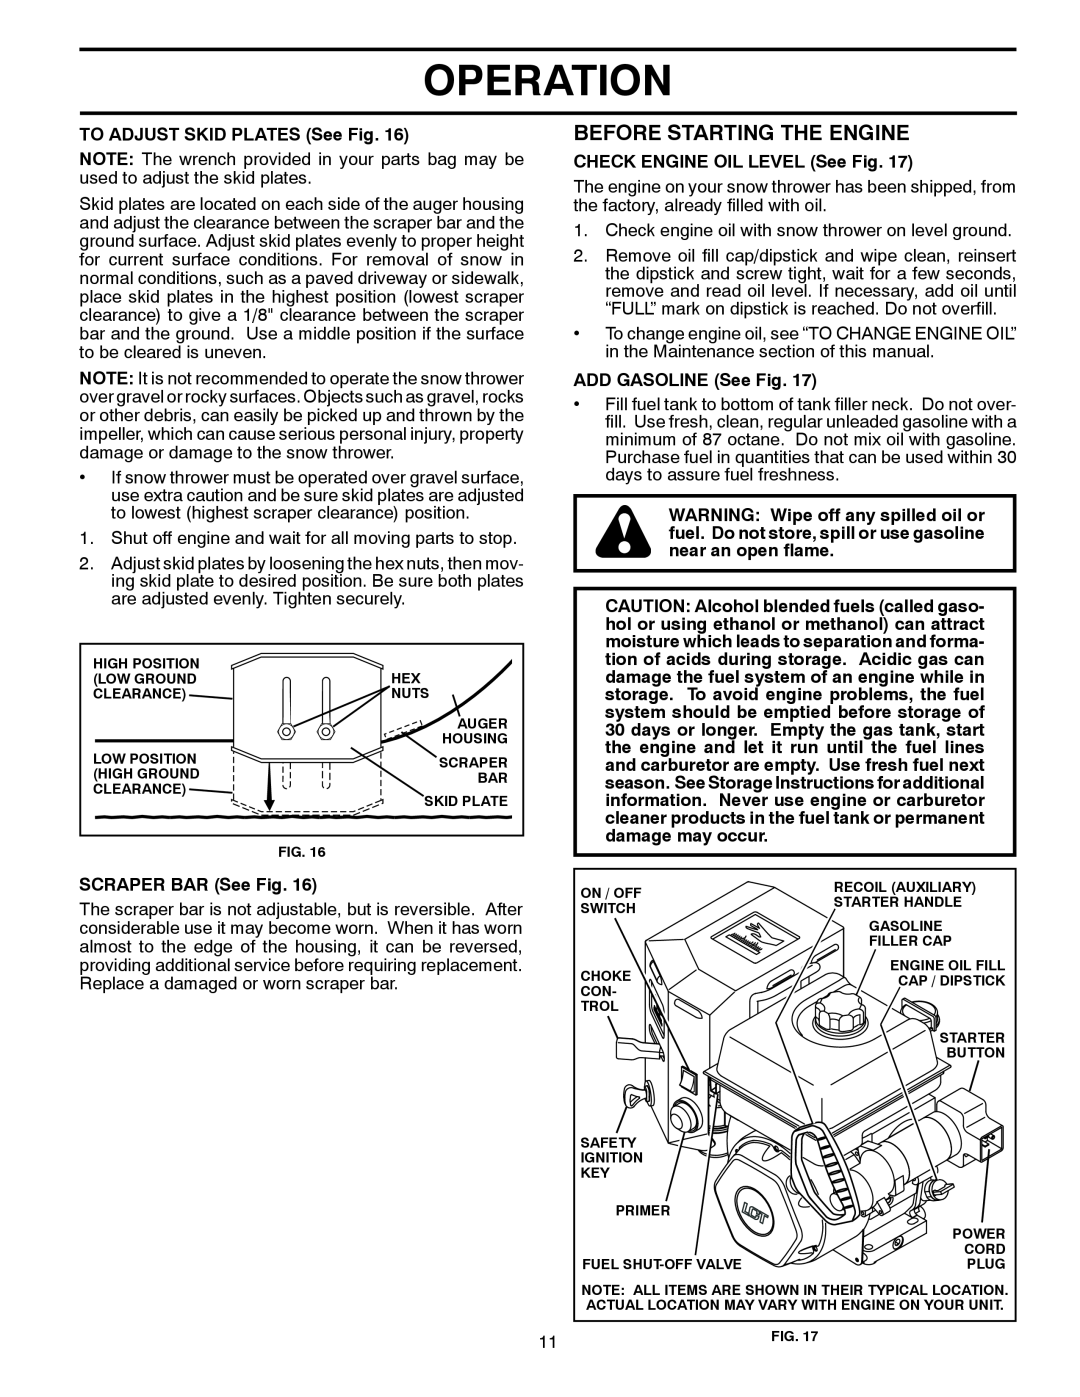 Husqvarna 1827SB manual Before Starting The Engine, Operation, TO ADJUST SKID PLATES See Fig, SCRAPER BAR See Fig 